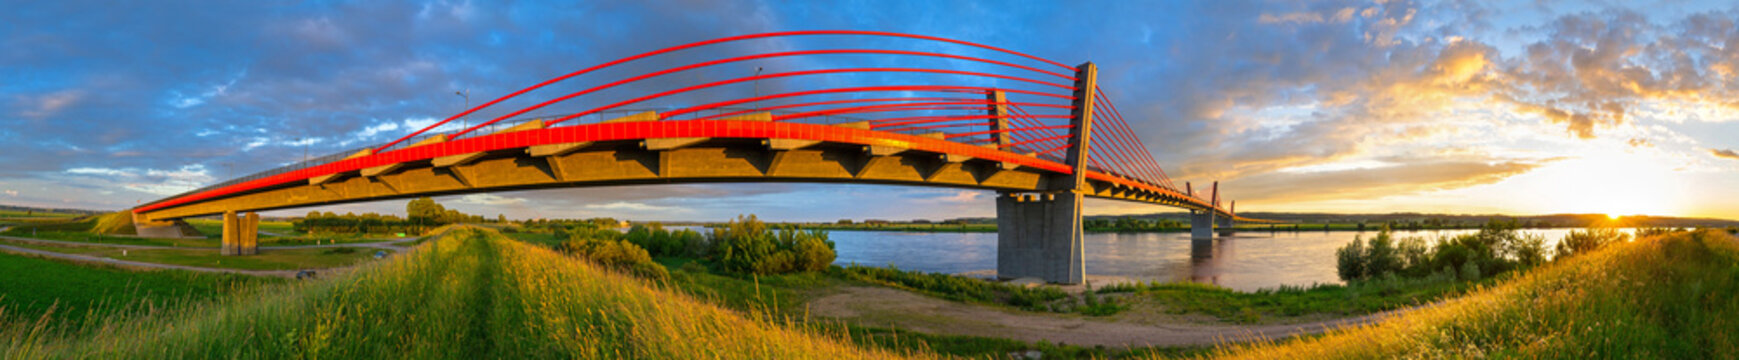 Fototapeta Cable stayed bridge over Vistula river in Poland at sunset